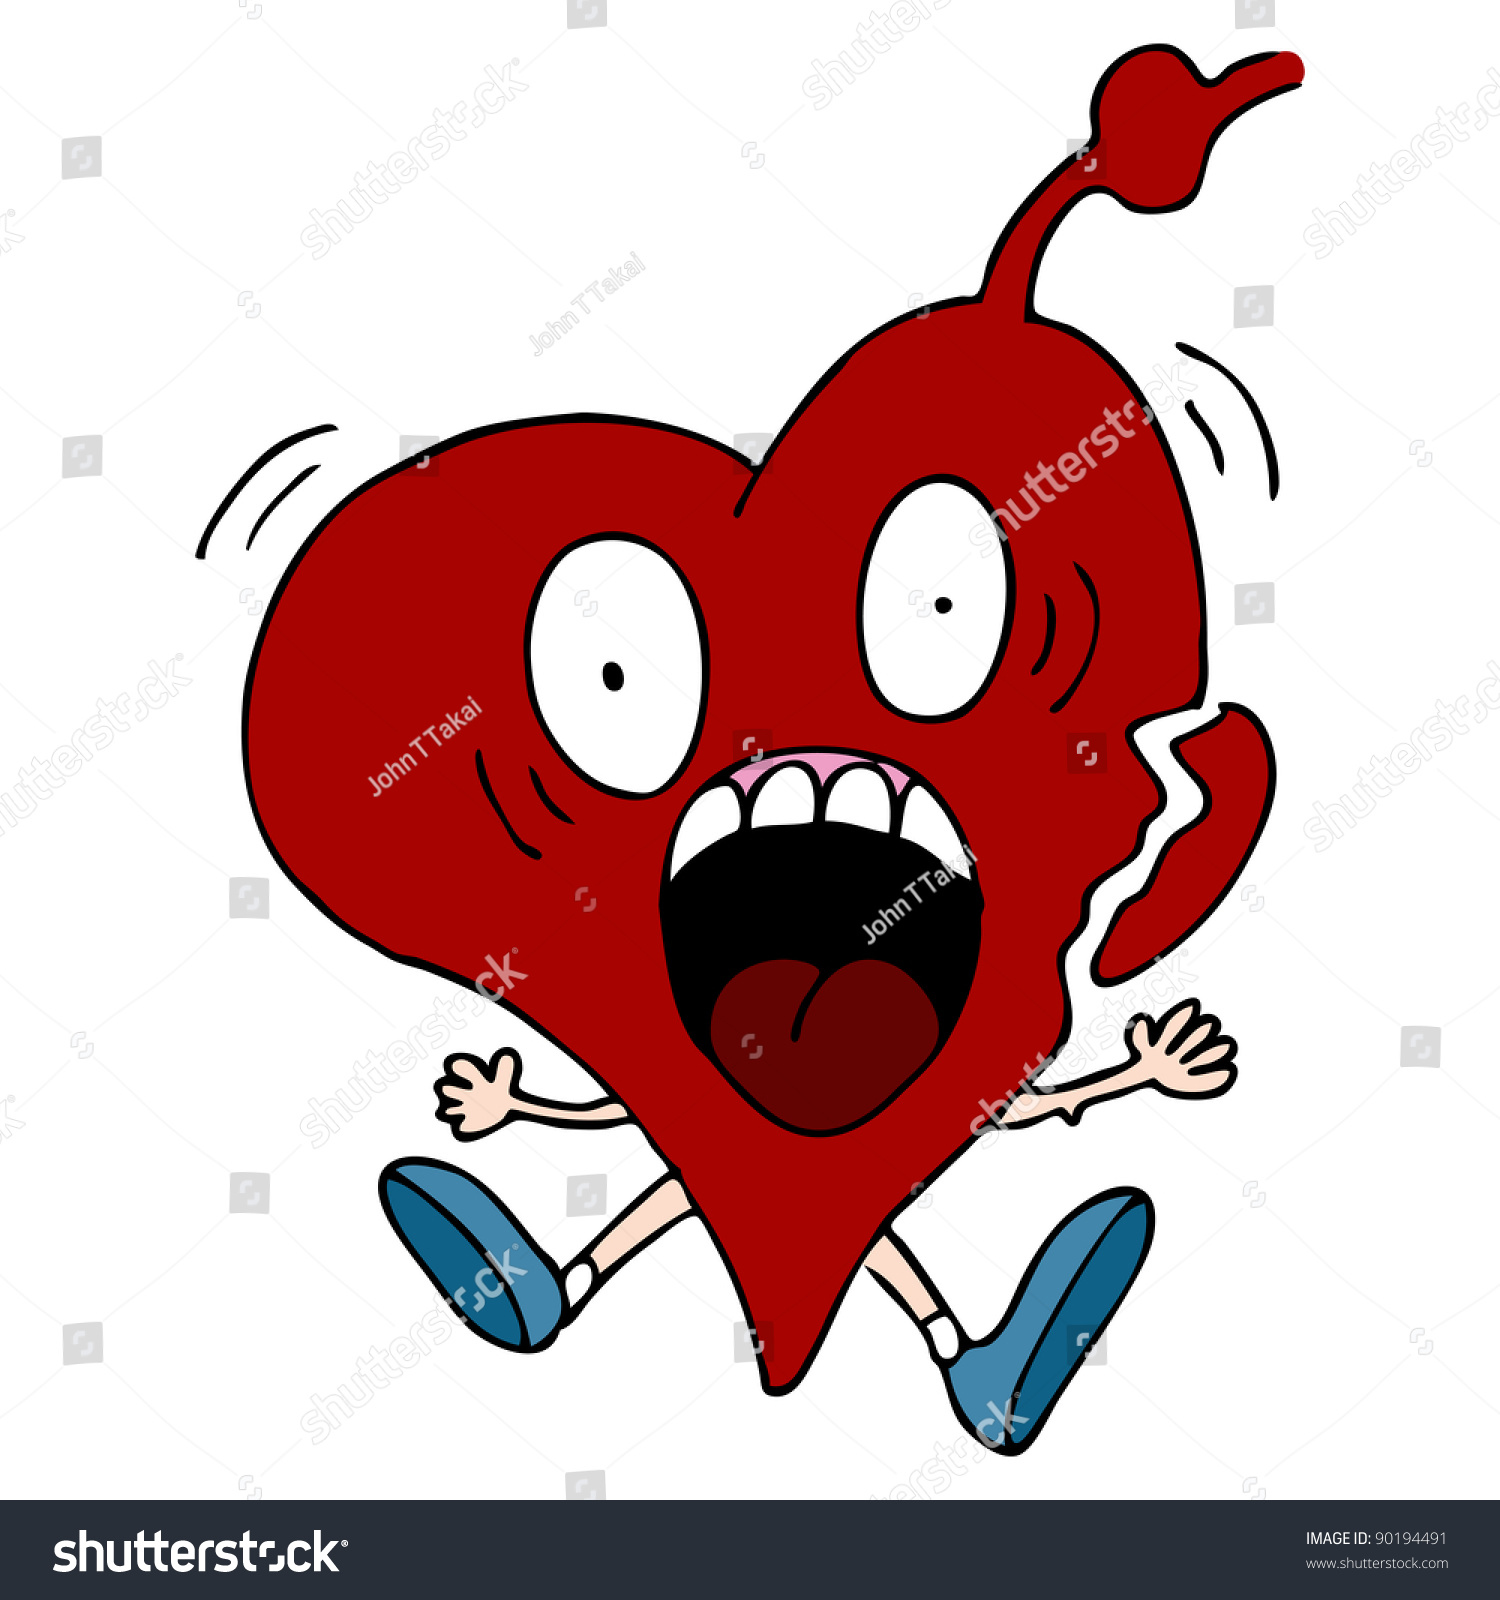 Image Heart Attack Cartoon Character Stock Vector 90194491 - Shutterstock